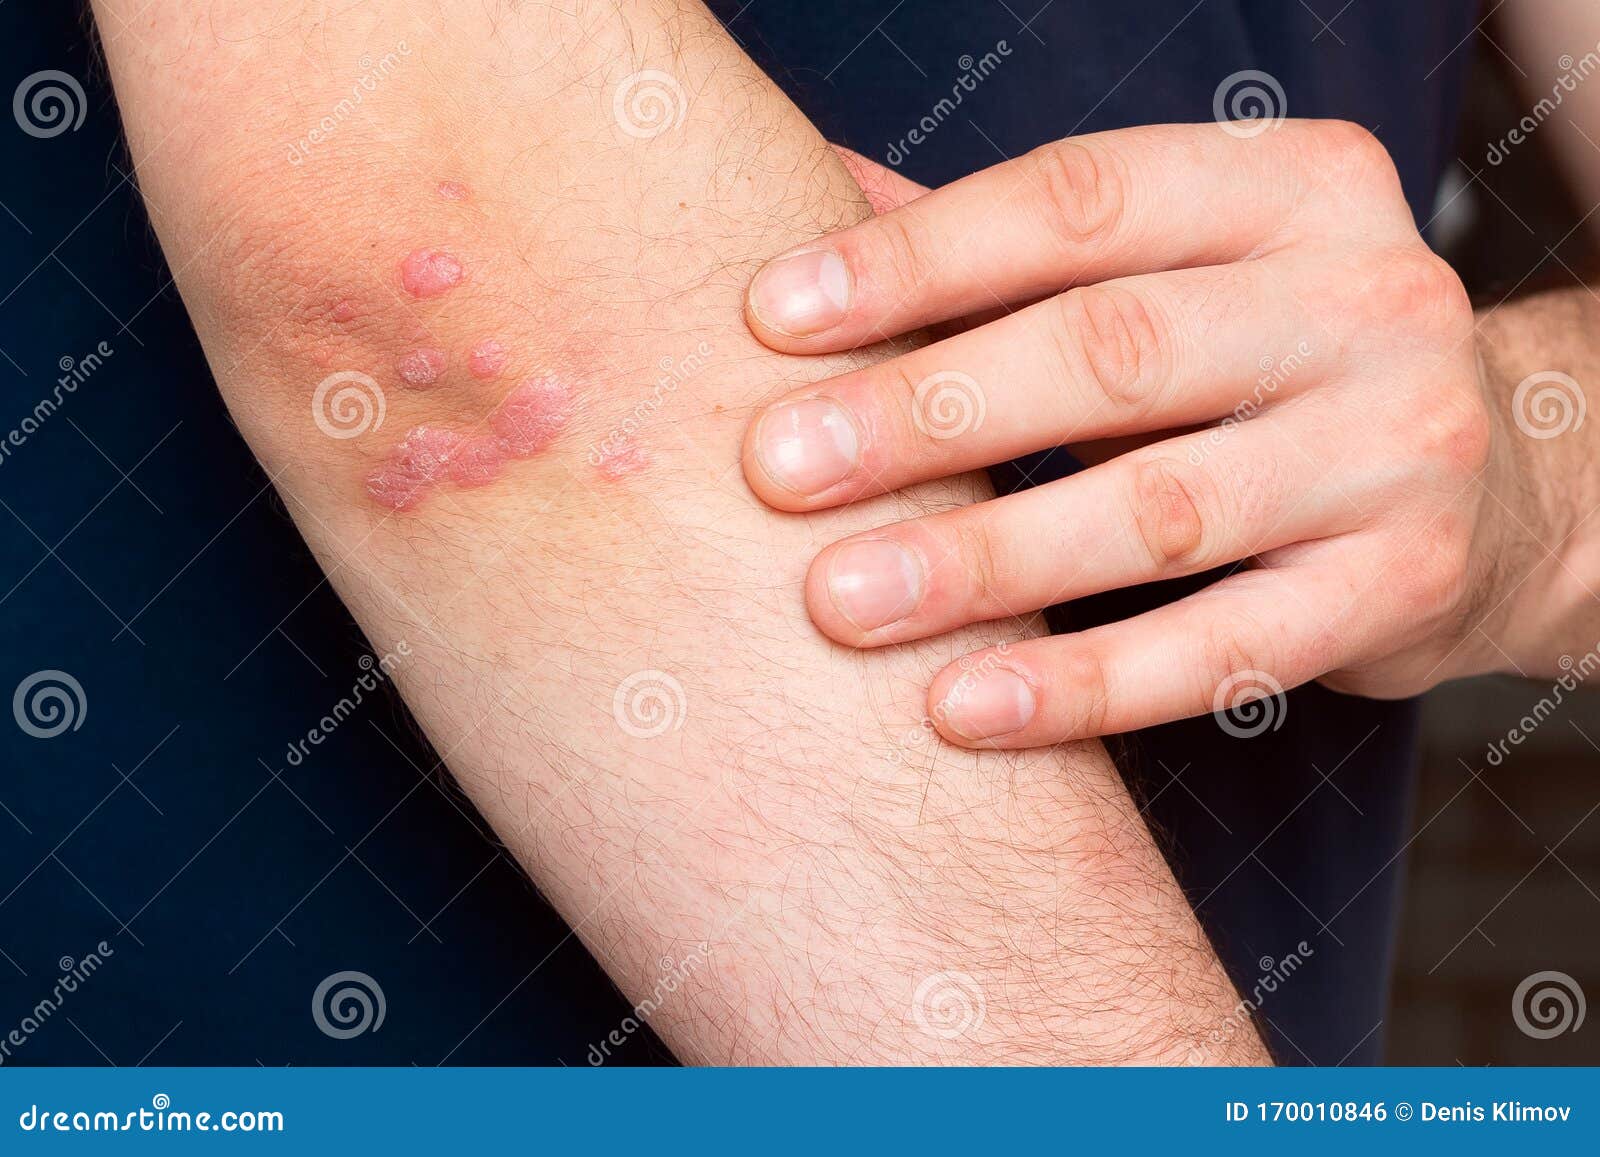 psoriasis painful elbows